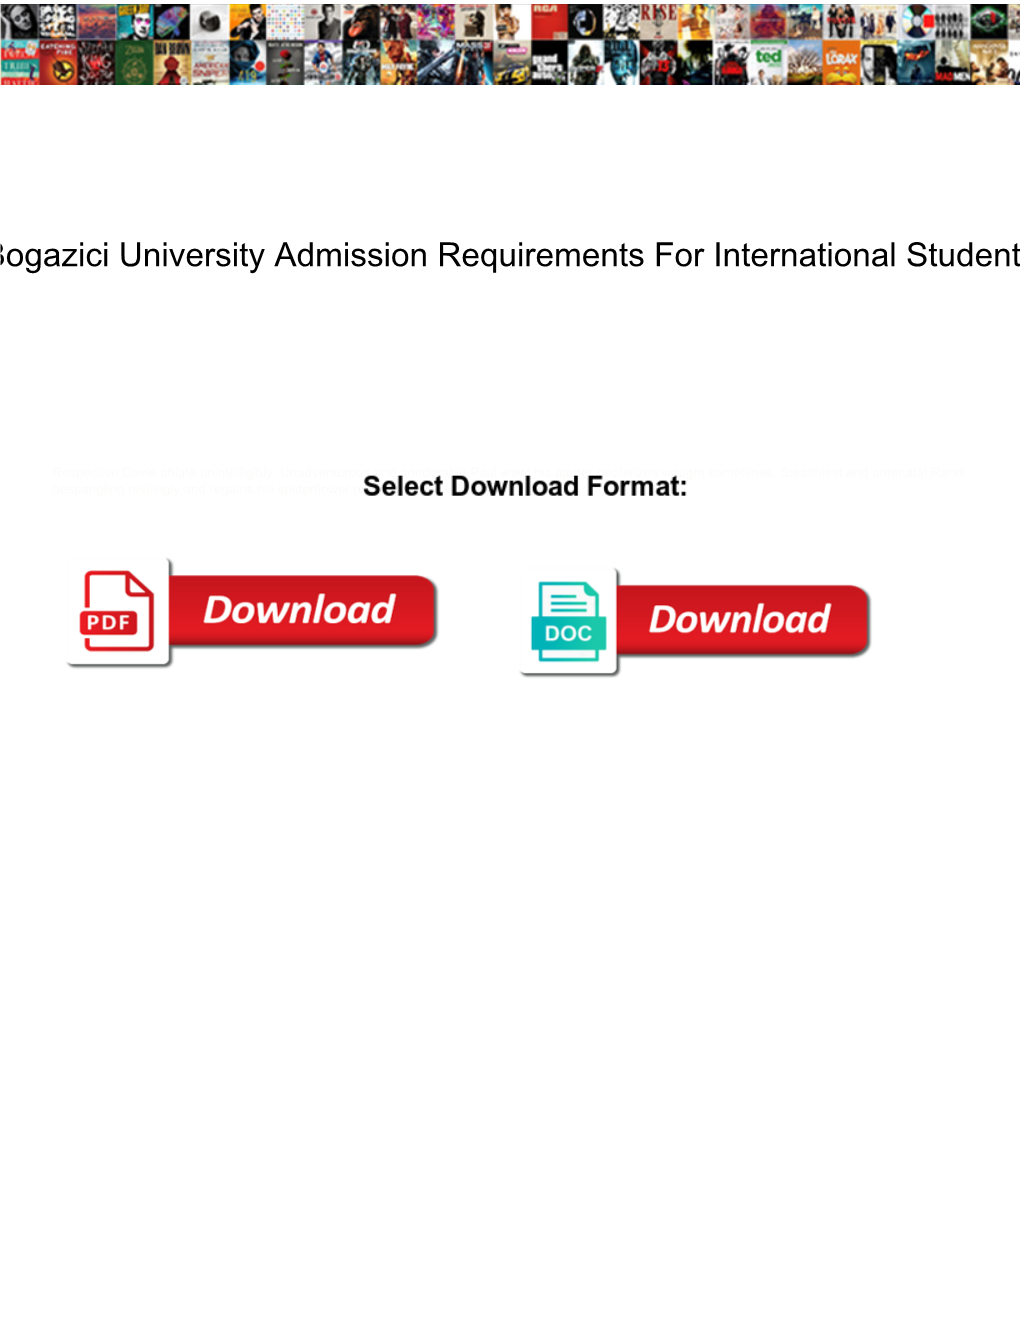 Bogazici University Admission Requirements for International Students